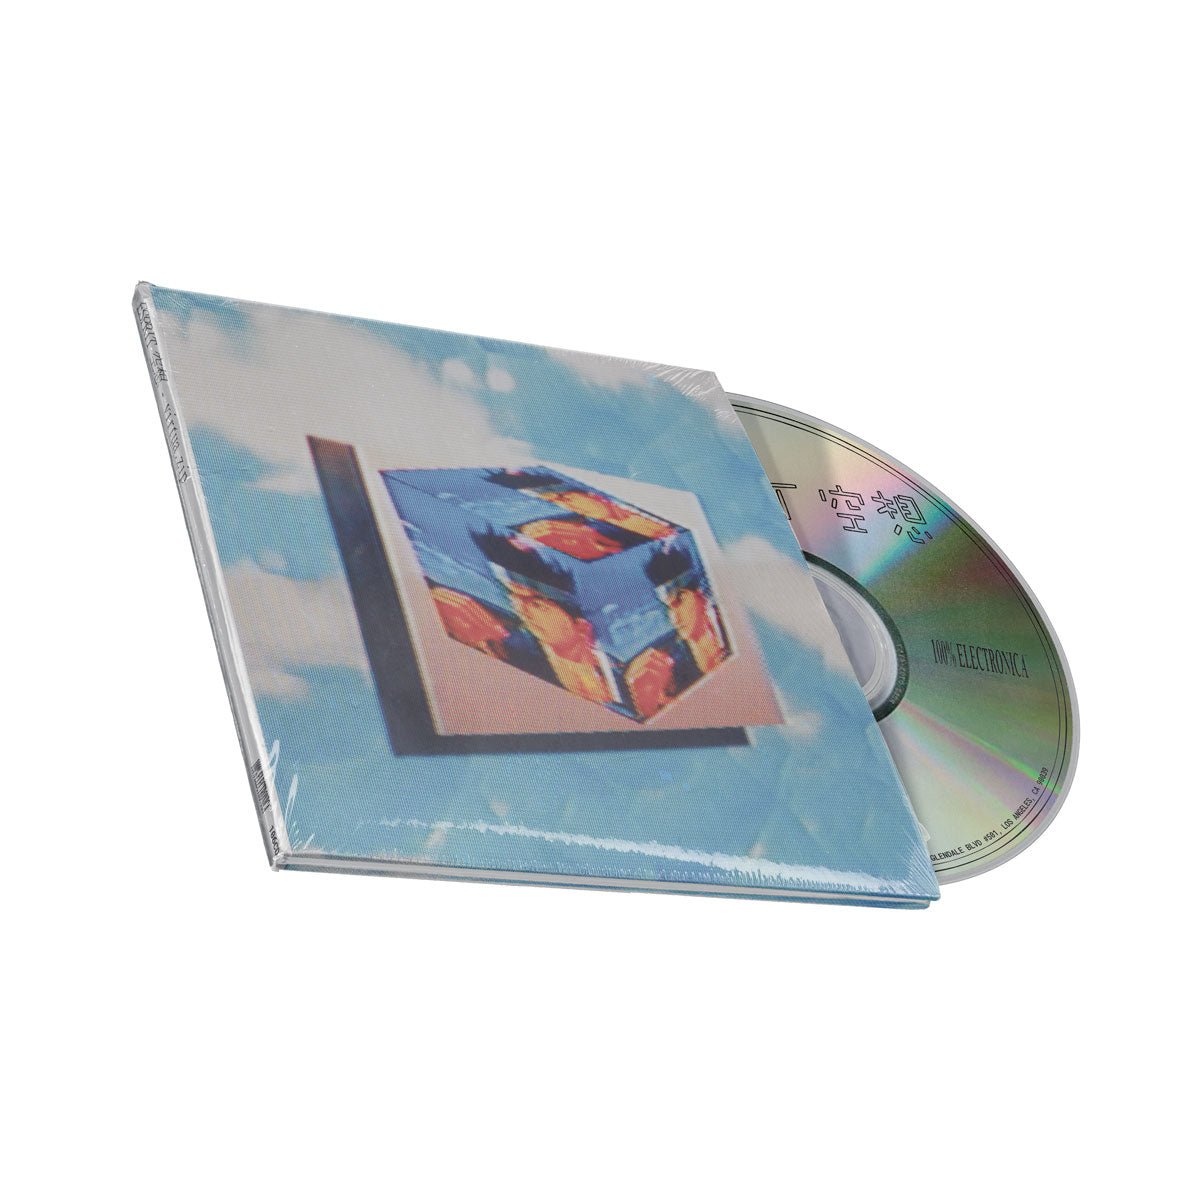 ESPRIT 空想 - 200% Electronica CD – 100% Electronica